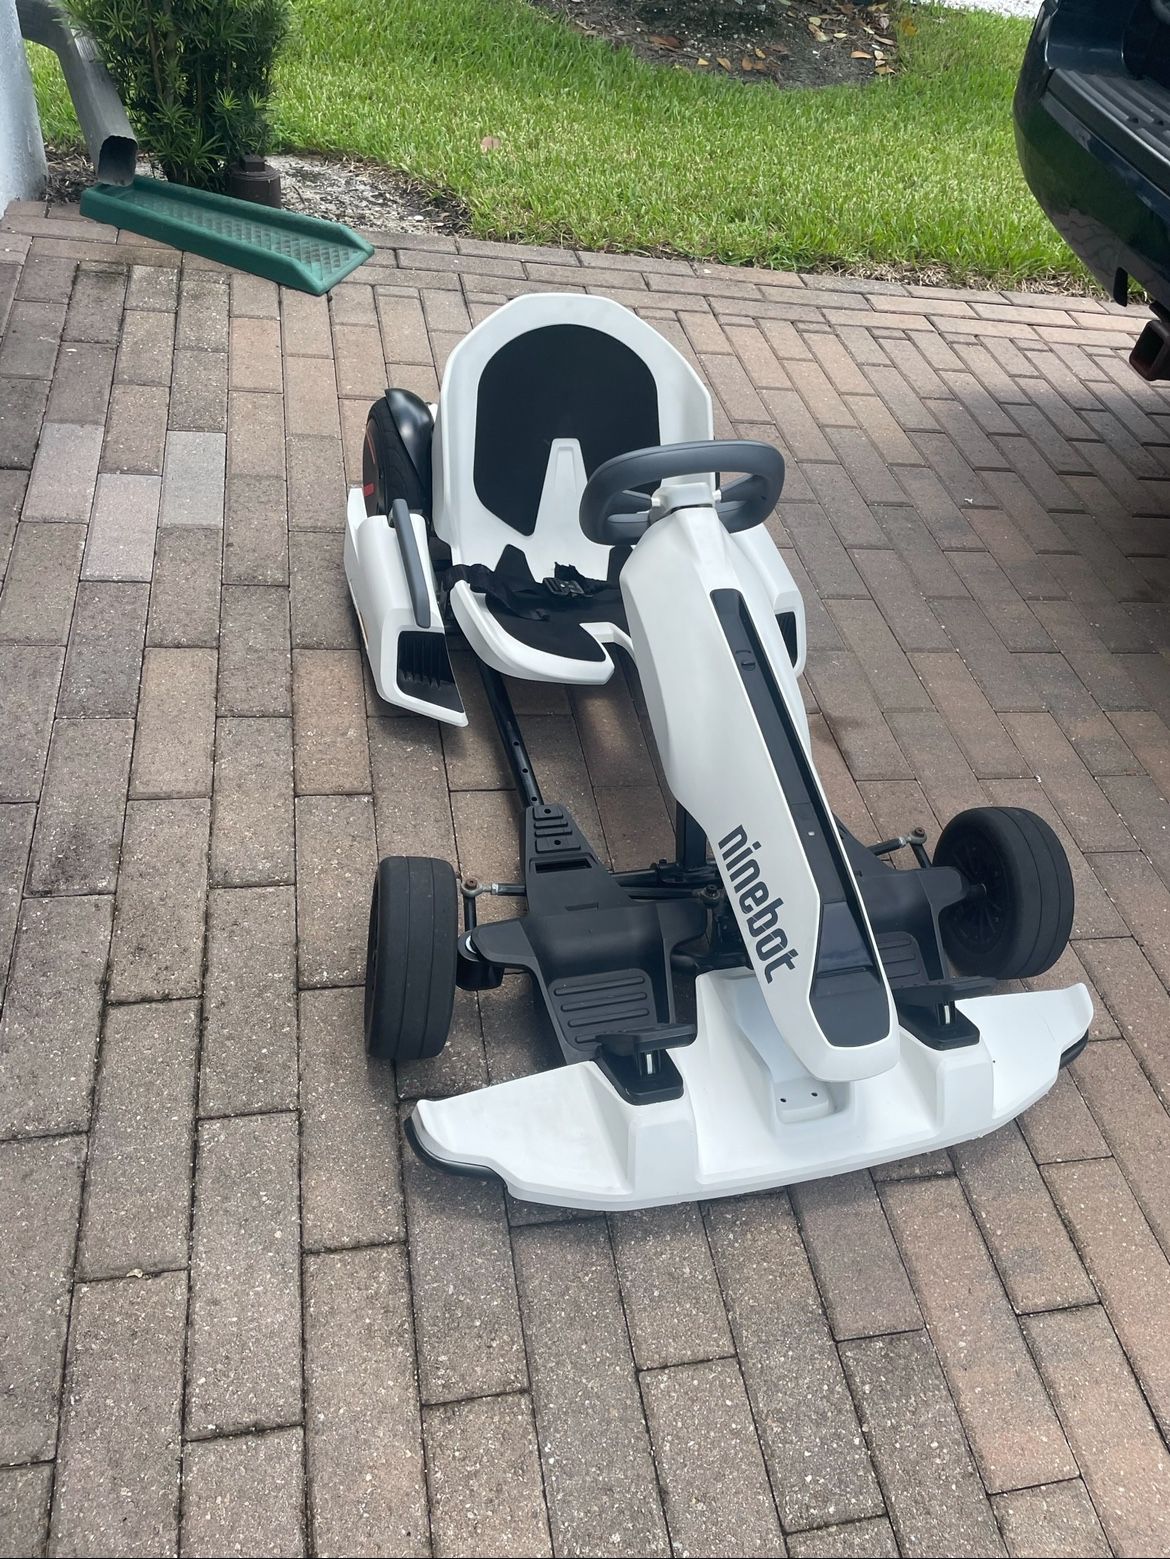 Ninebot Segway Kart Electric Car Adult Kids